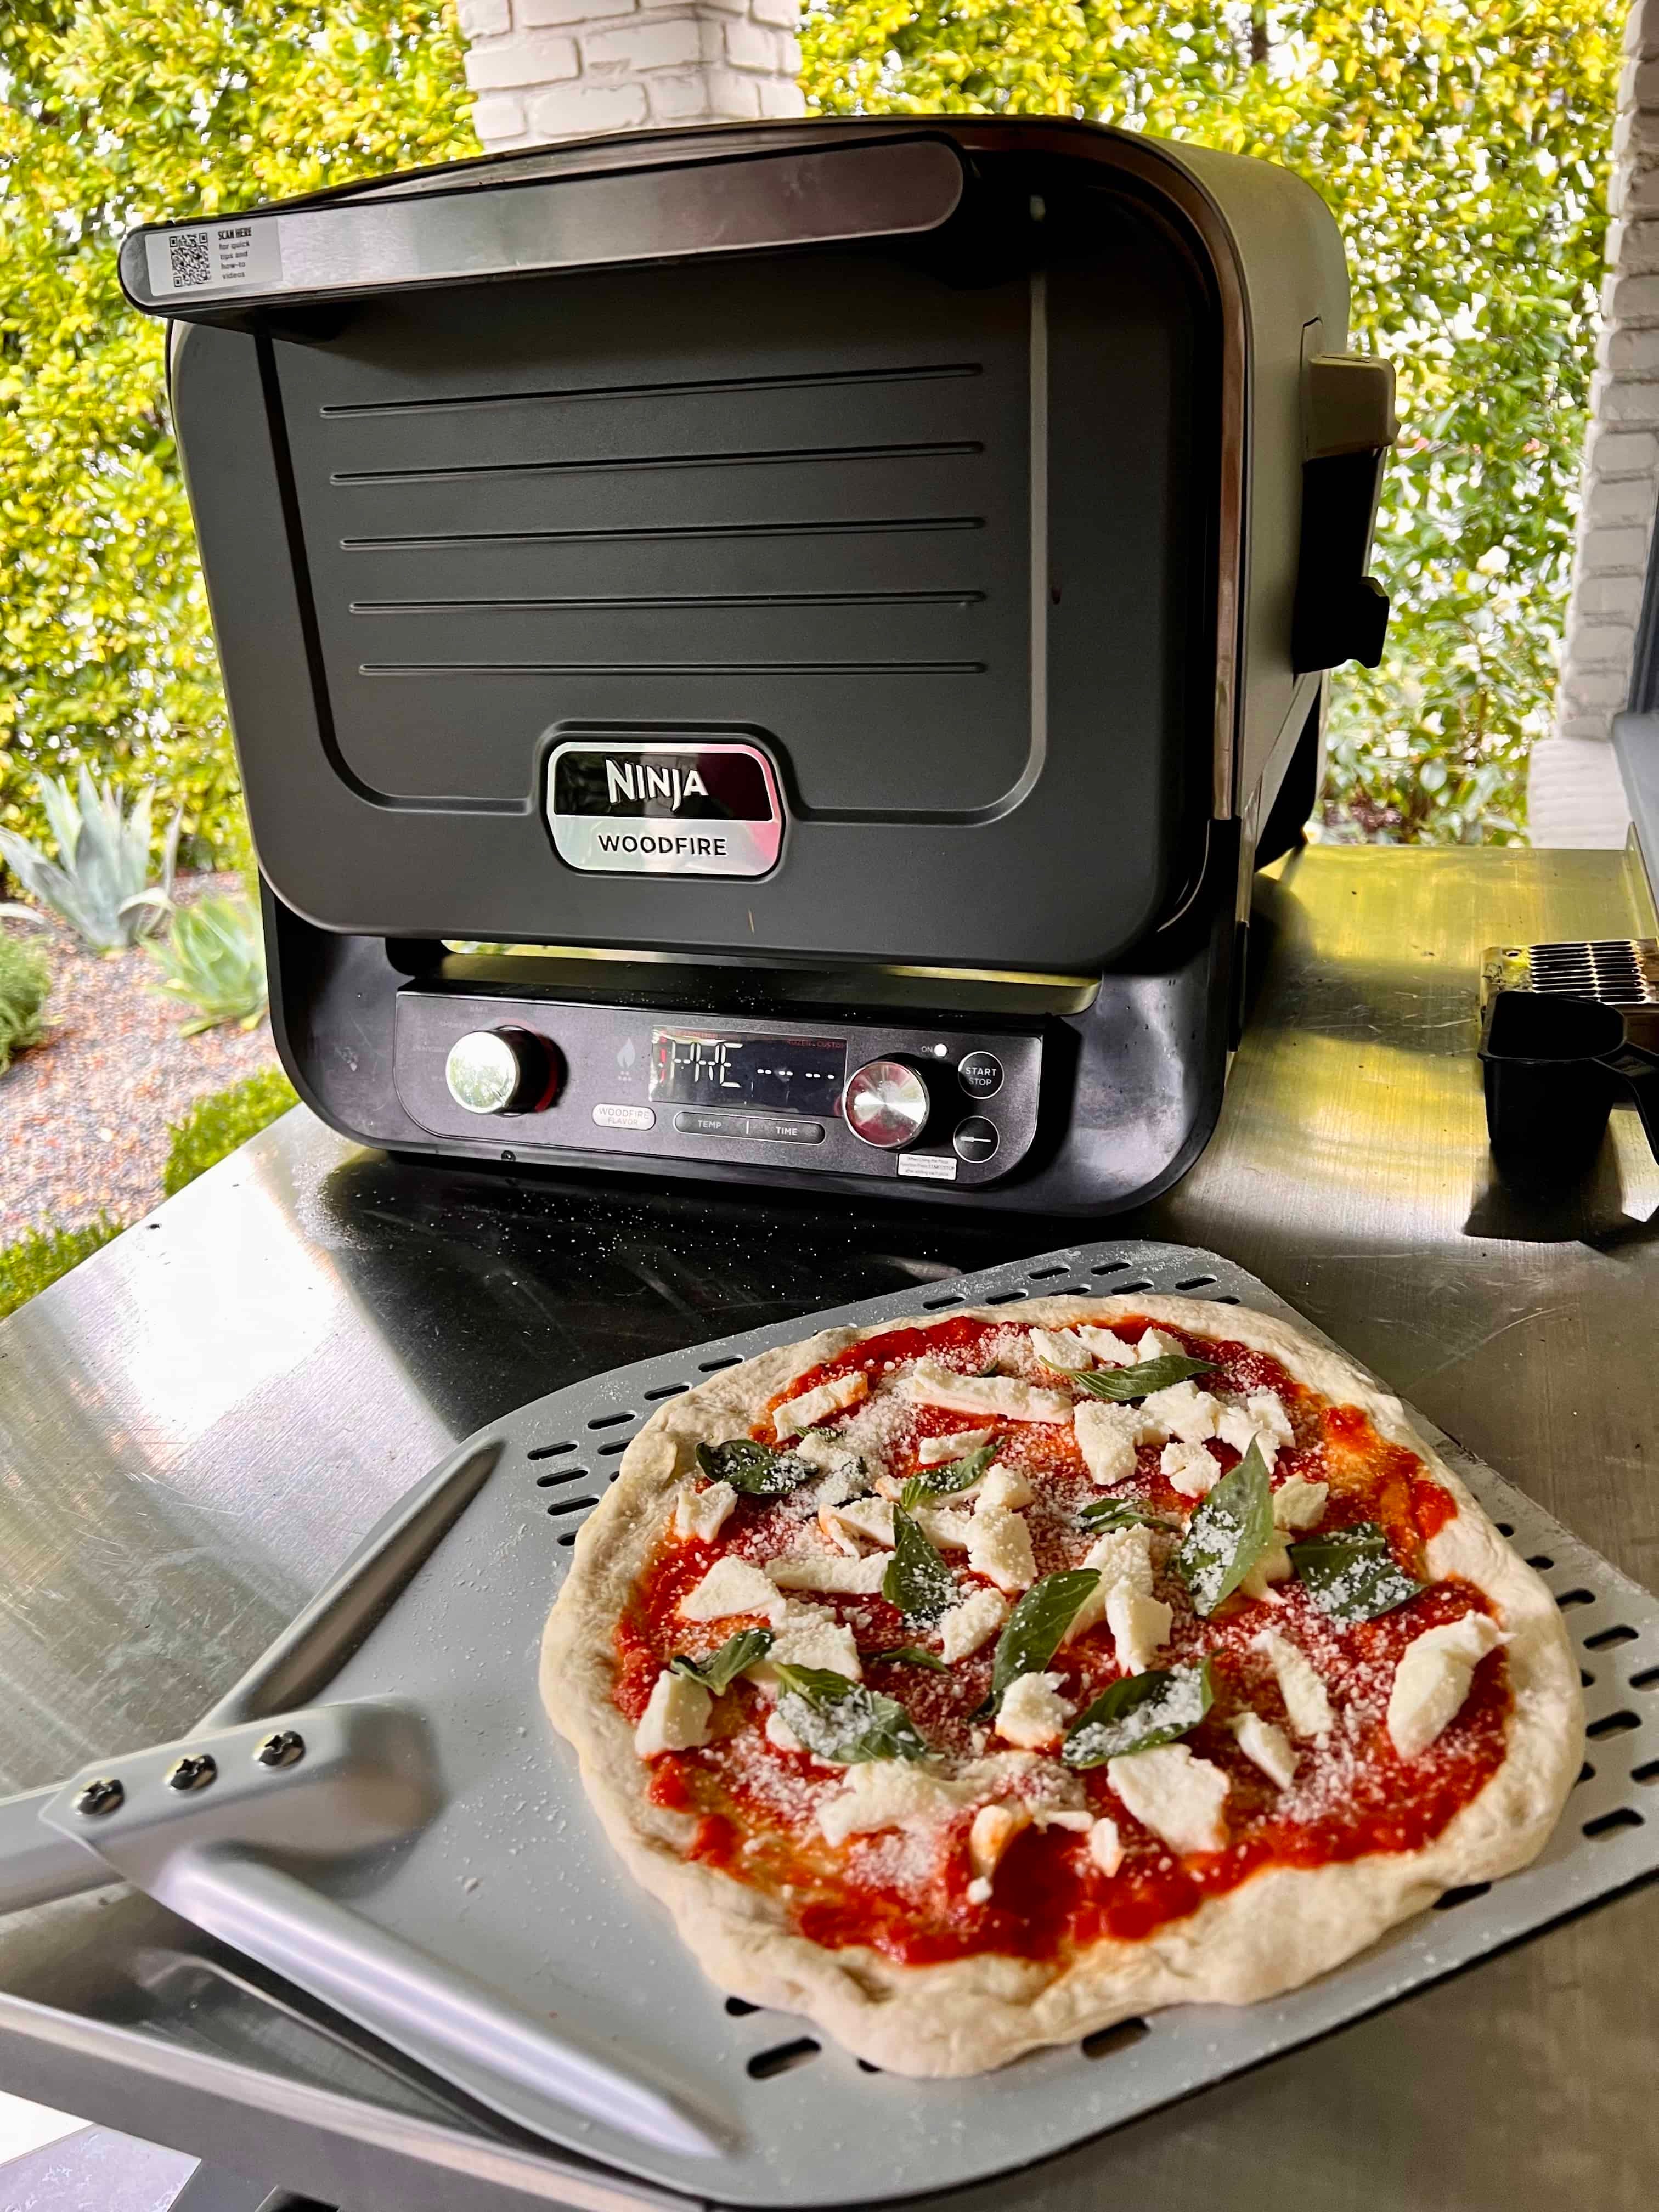 Ninja Woodfire 8-in-1 Outdoor BBQ Smoker & Pizza Oven